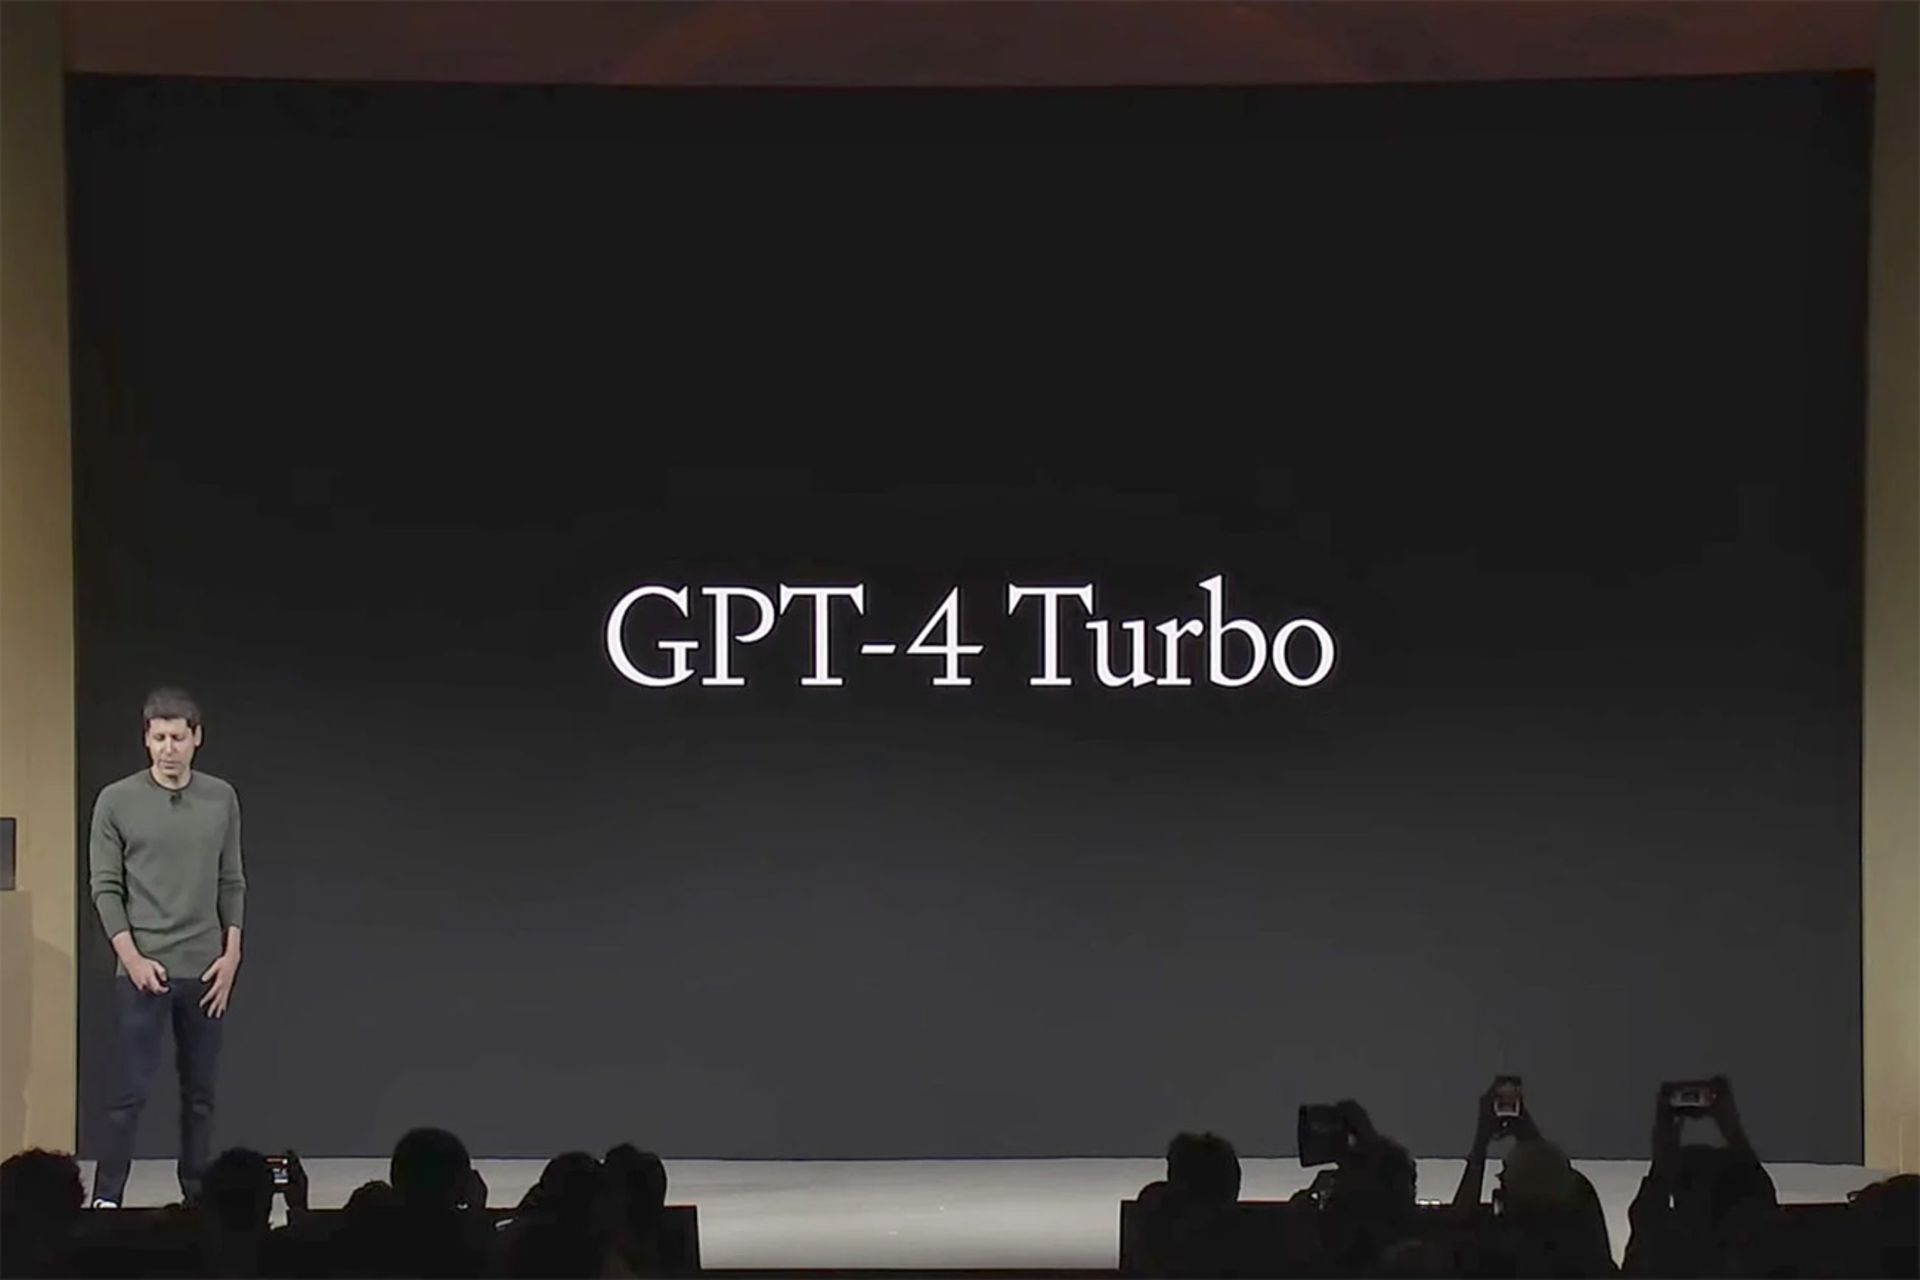 هوش مصنوعی GPT-4 Turbo